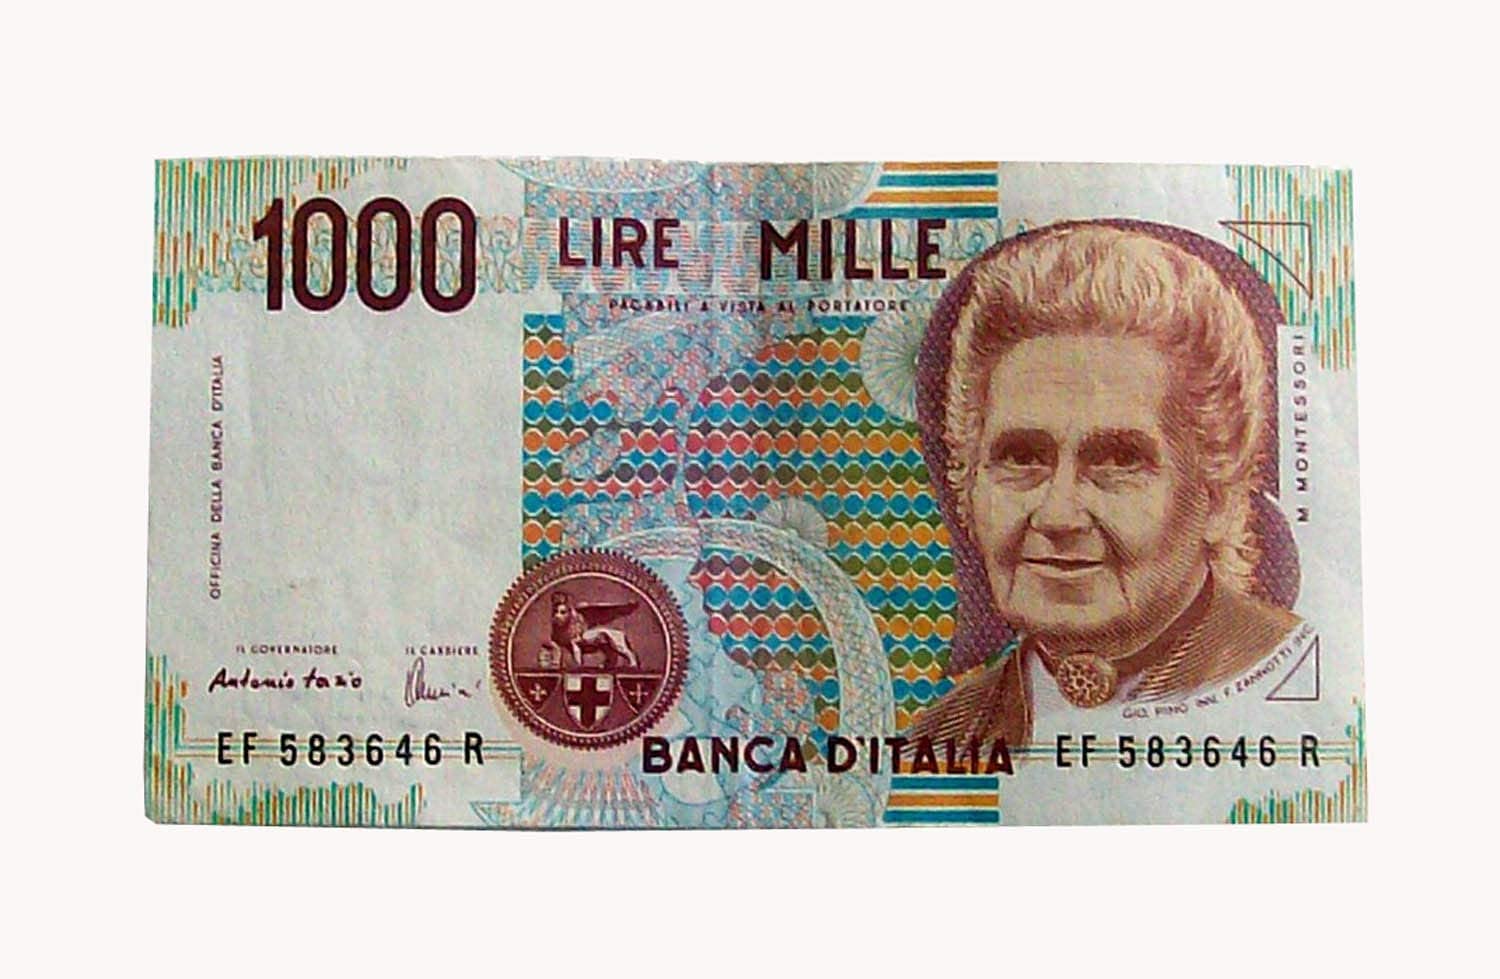 Banconote mille lire